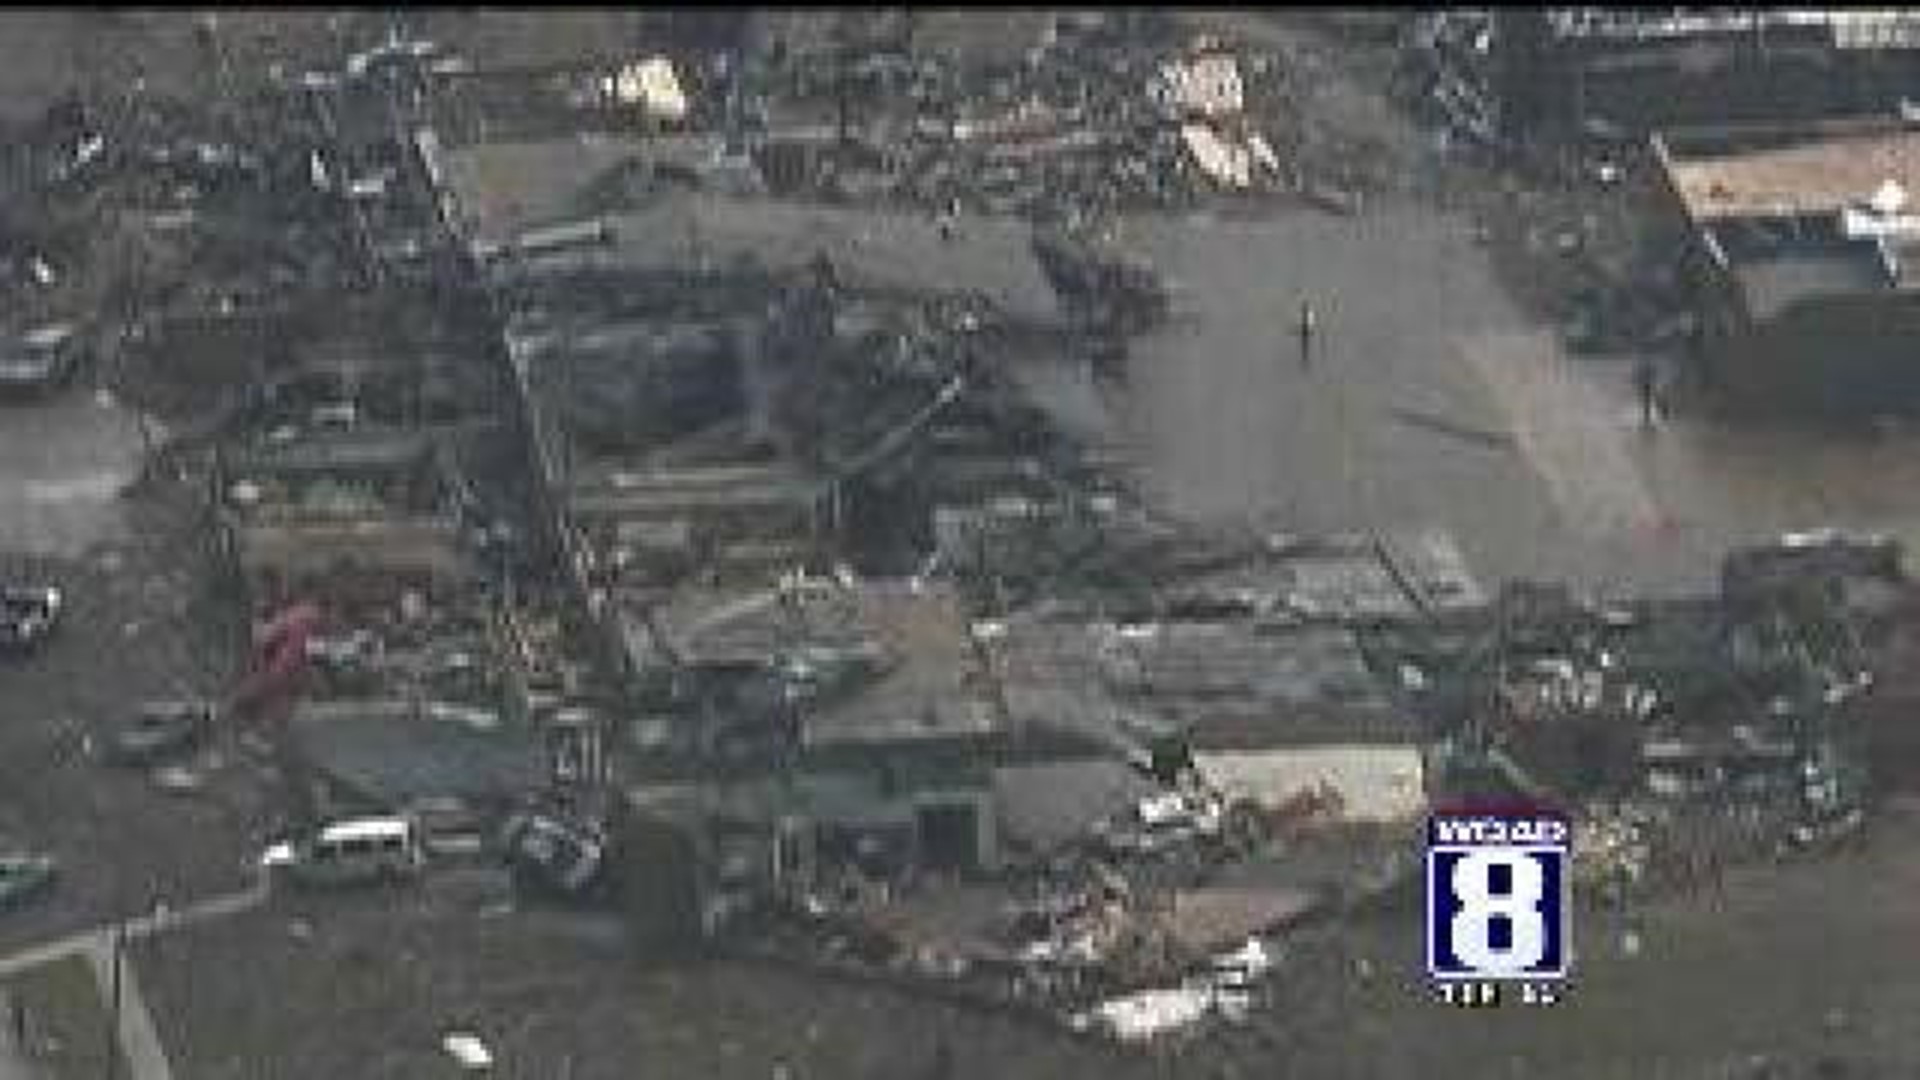 Tornado damage in Oklahoma